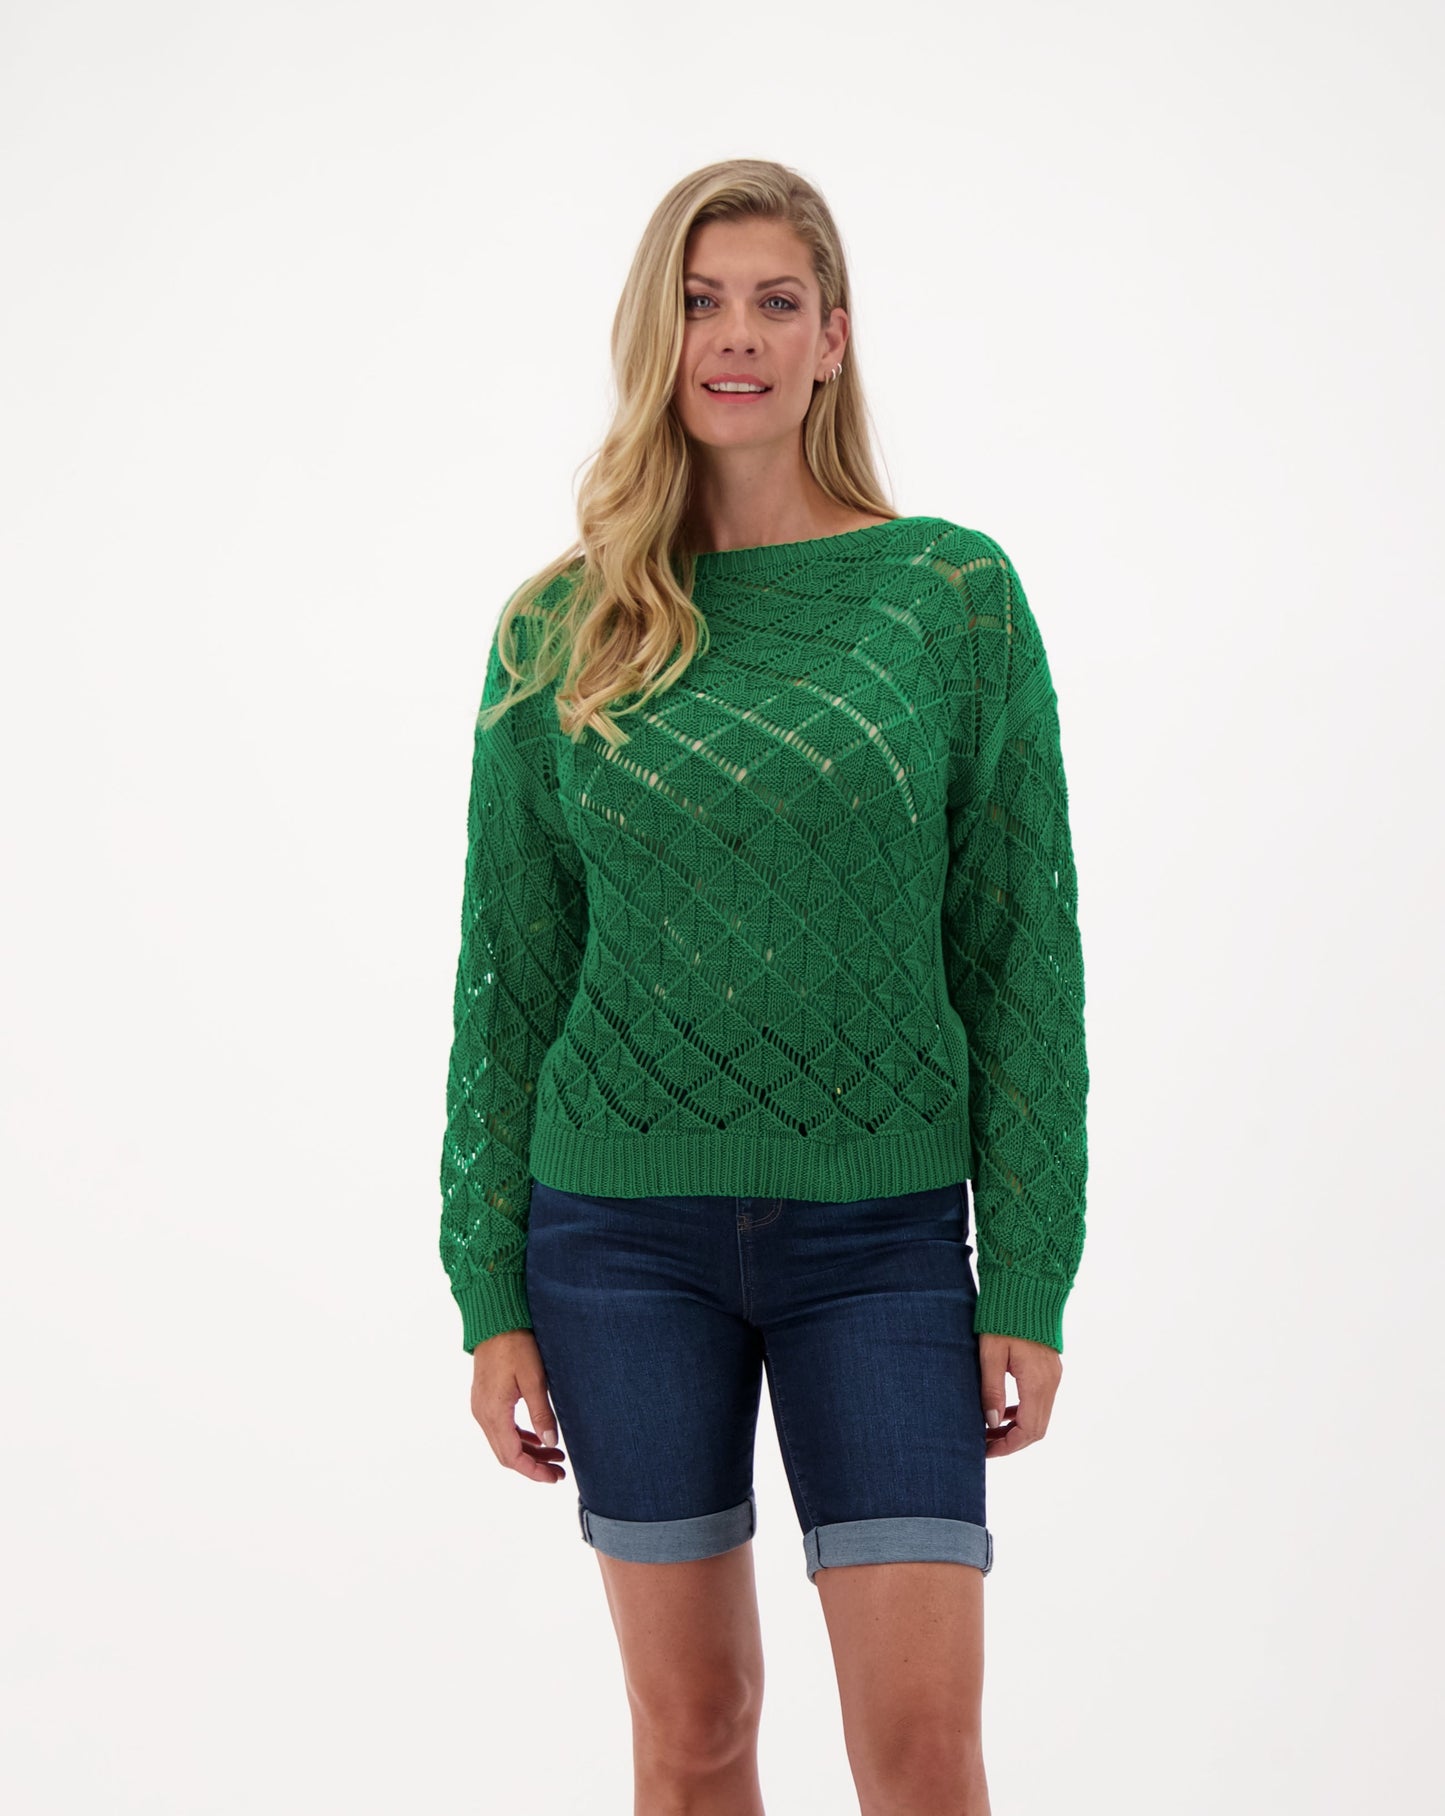 Green Crochet Sweater